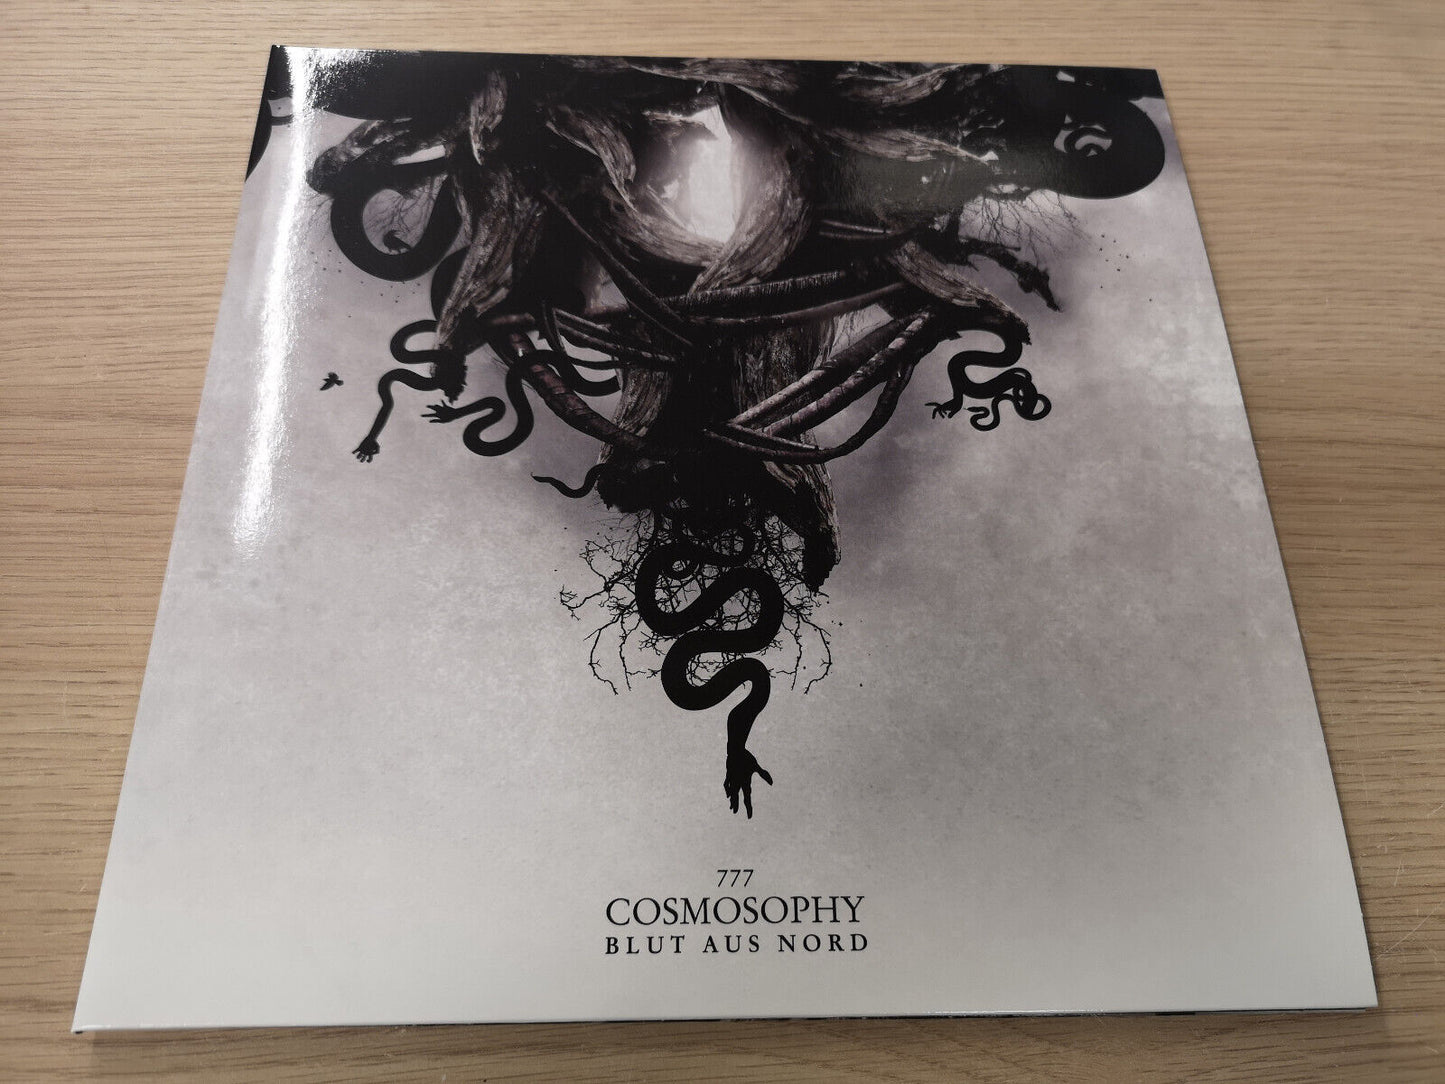 Blut Aus Nord "Cosmosophy" NEW Ltd w/ Poster Grey Vinyl